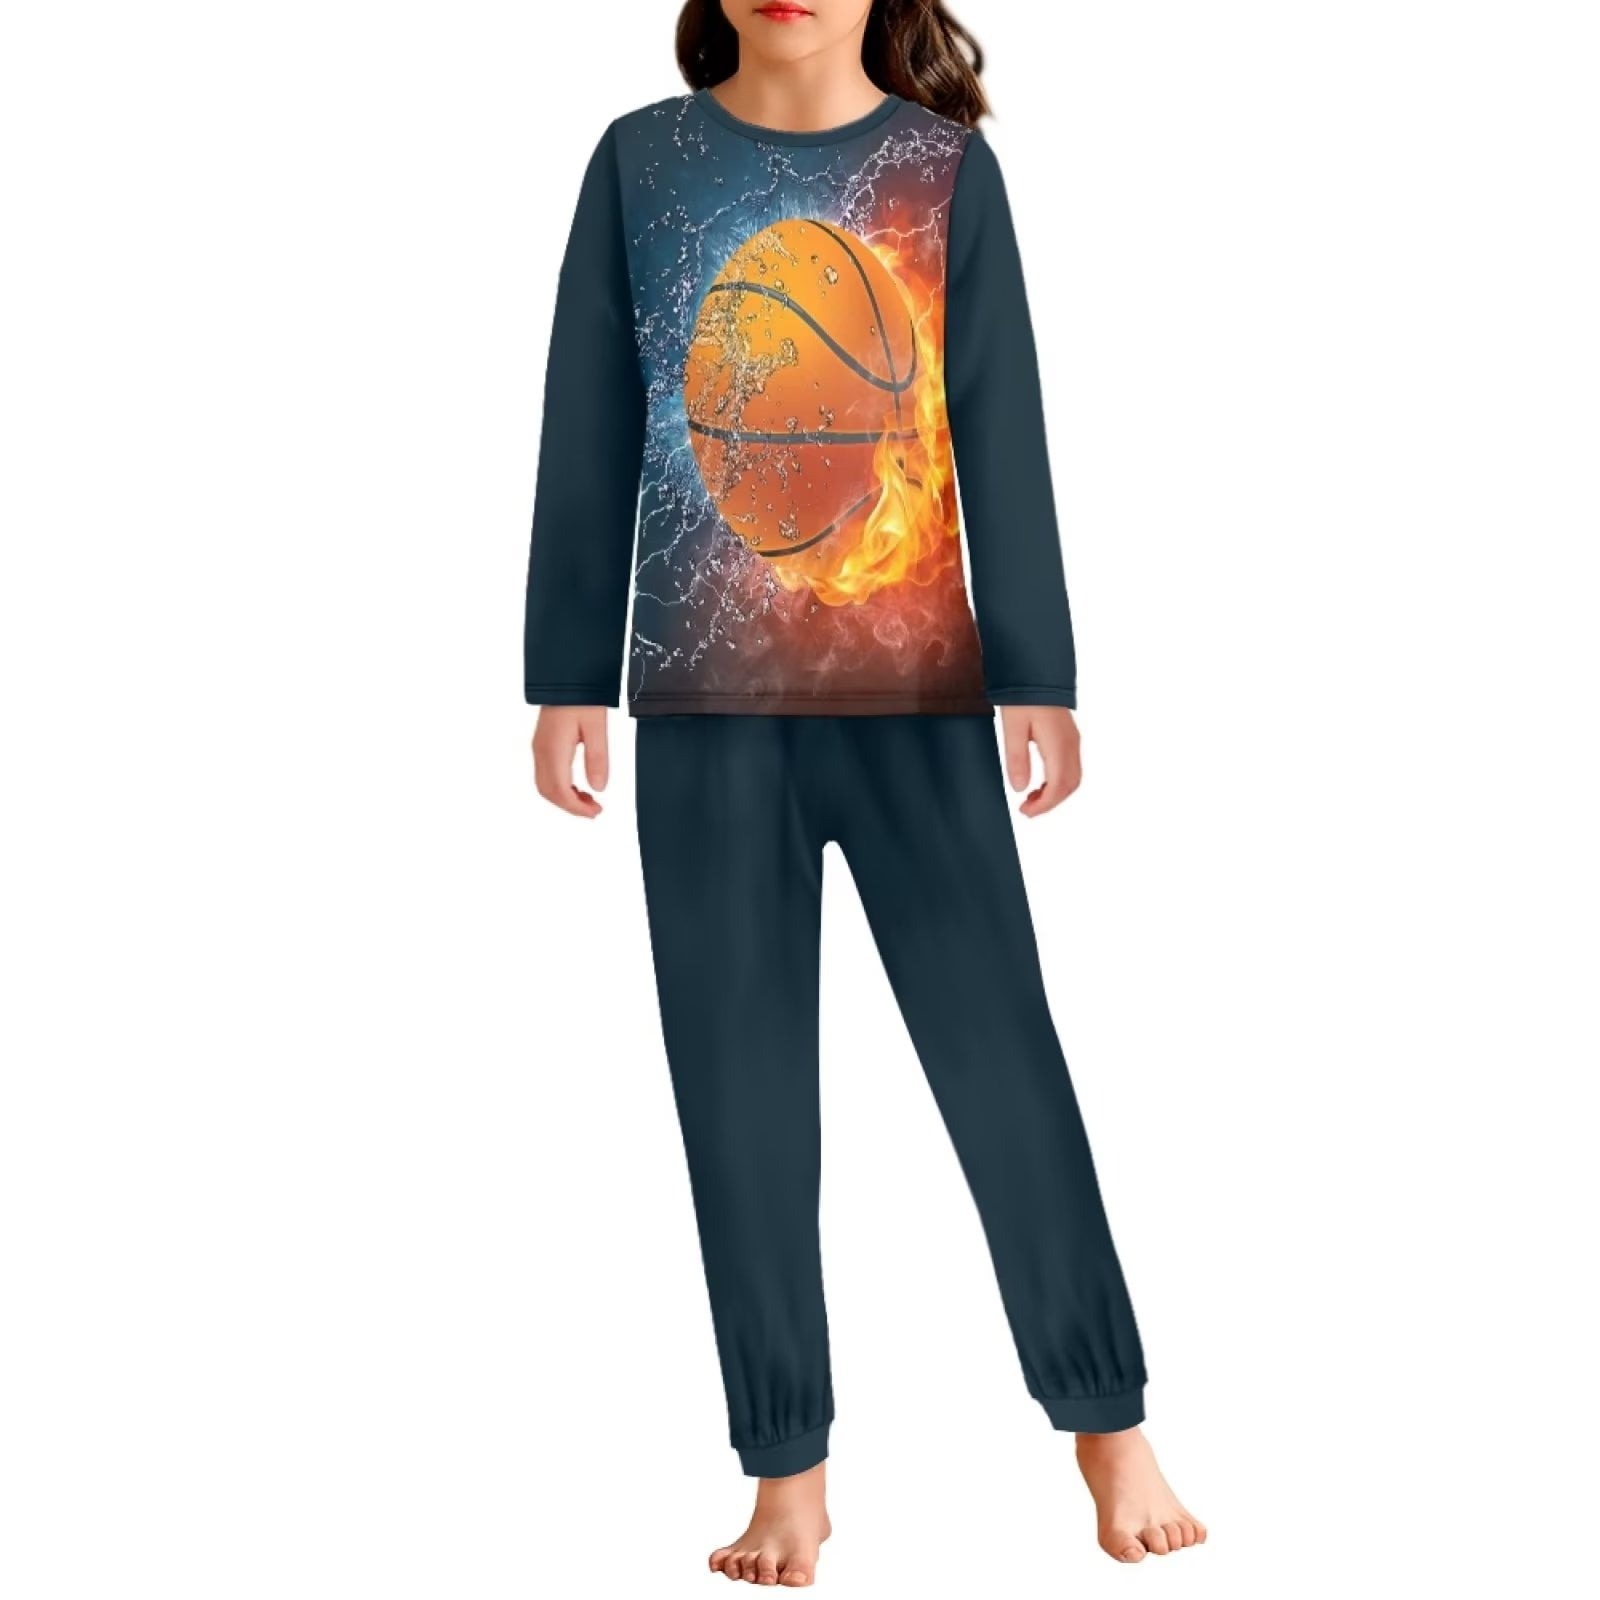 Pzuqiu Elastic Pajama Pants Basketball Print Cozy Up Sleep Clothes